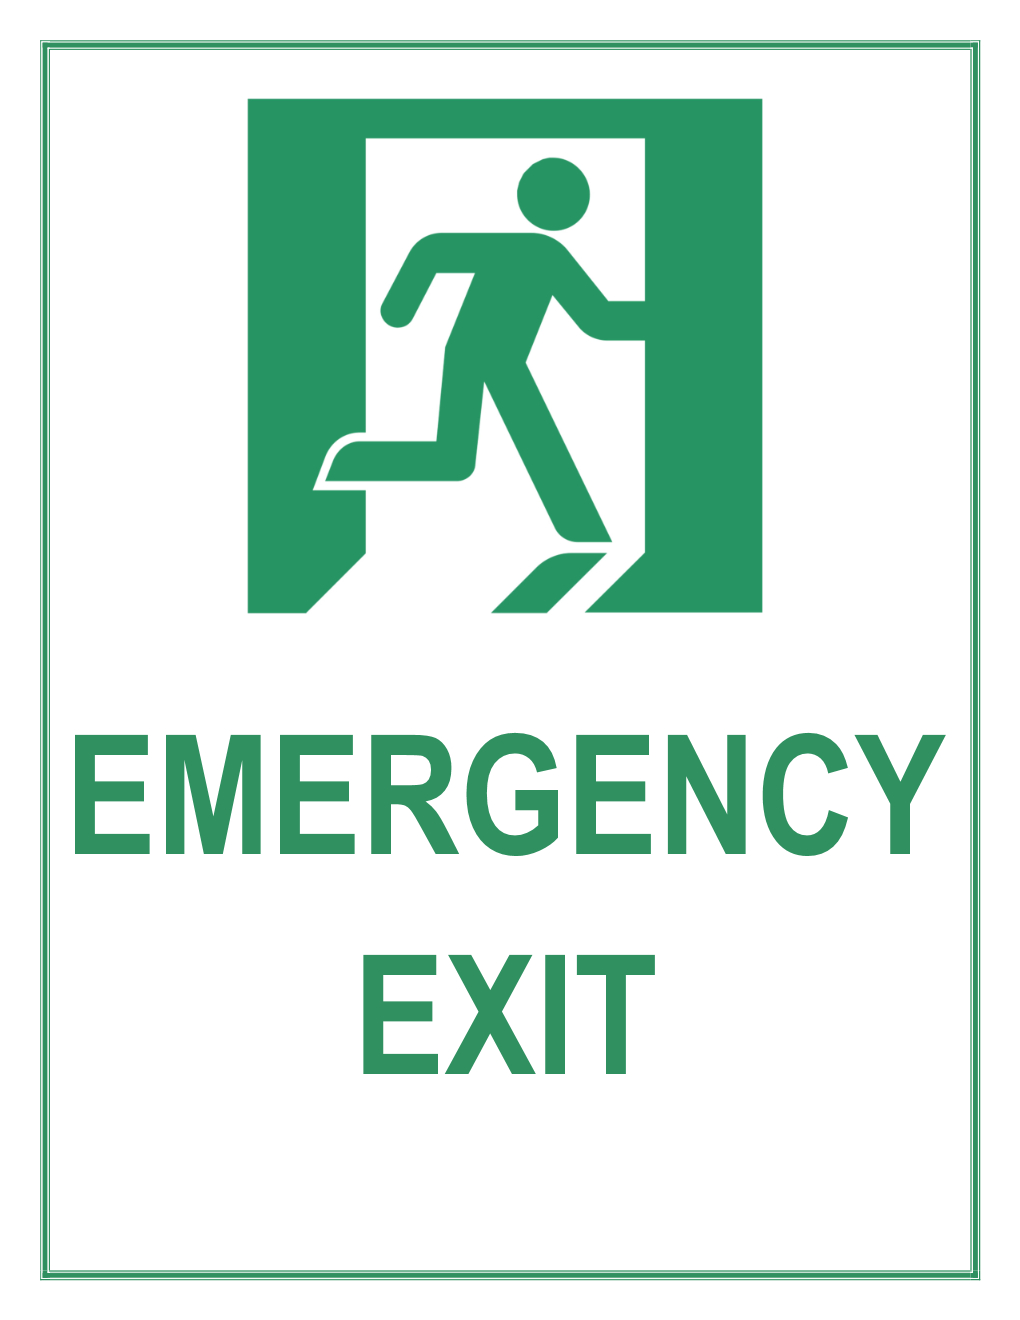 Emergency Exit Door cs go skin instal the last version for ios